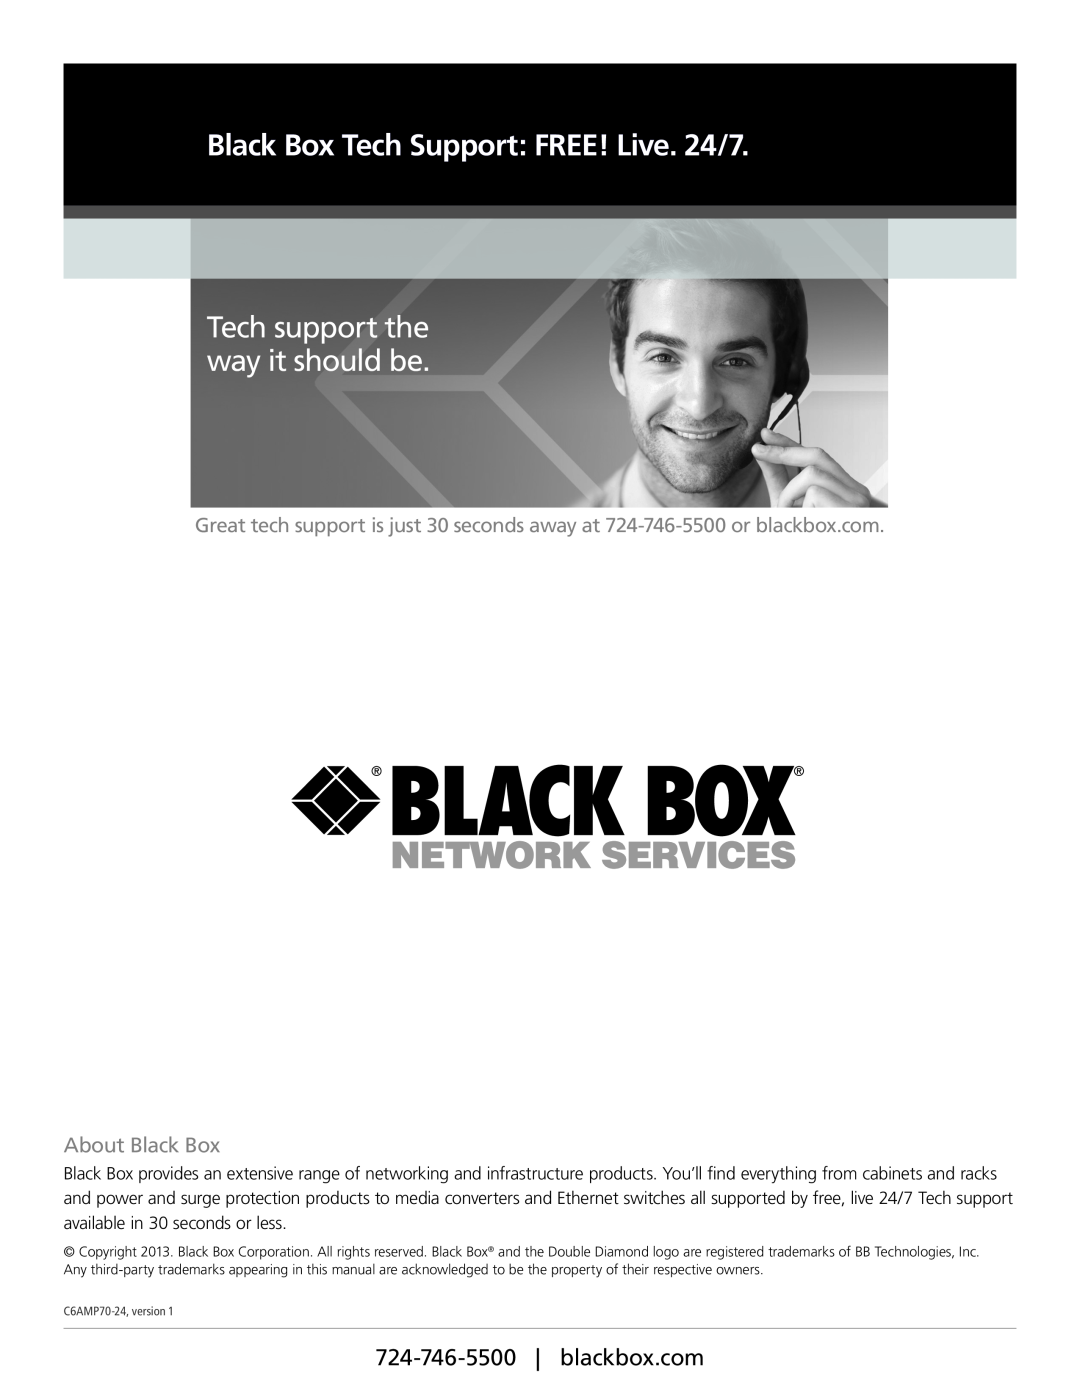 Black Box C6AMP70-24, C6AMP70-48 Black Box Tech Support FREE! Live. 24/7, Tech support the way it should be, blackbox.com 